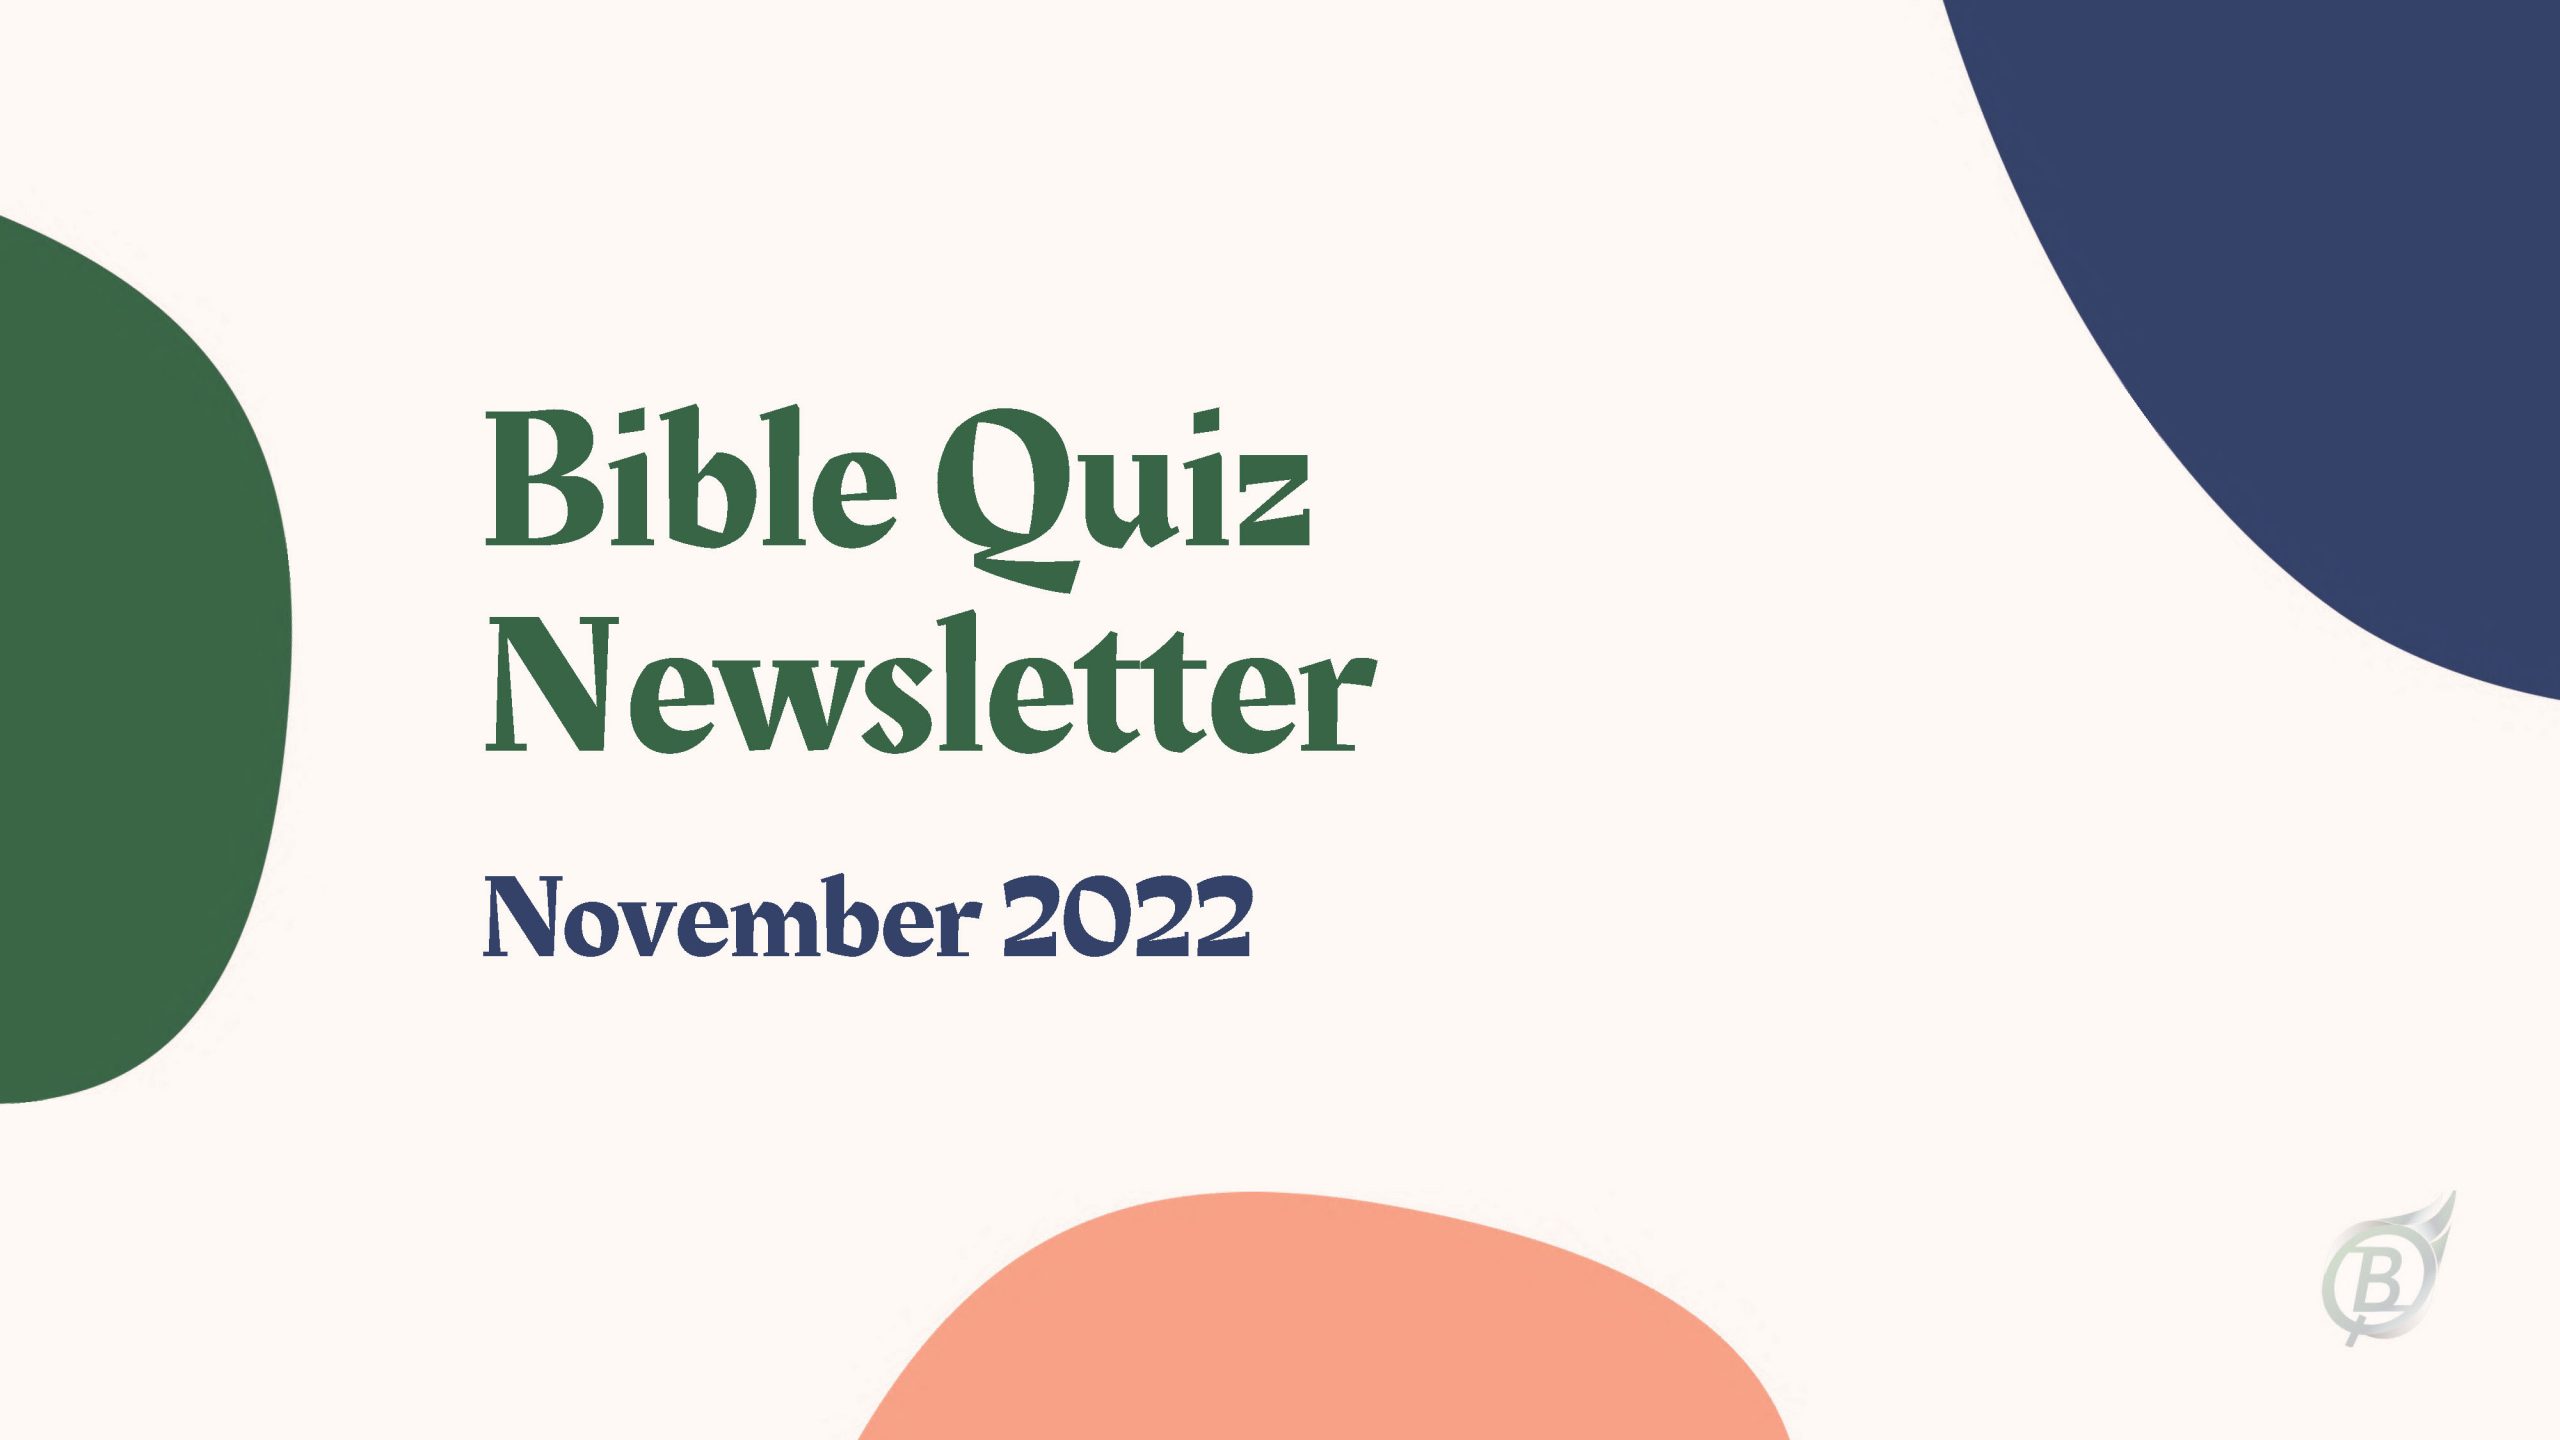 Bible Quiz Newsletter - November 2022